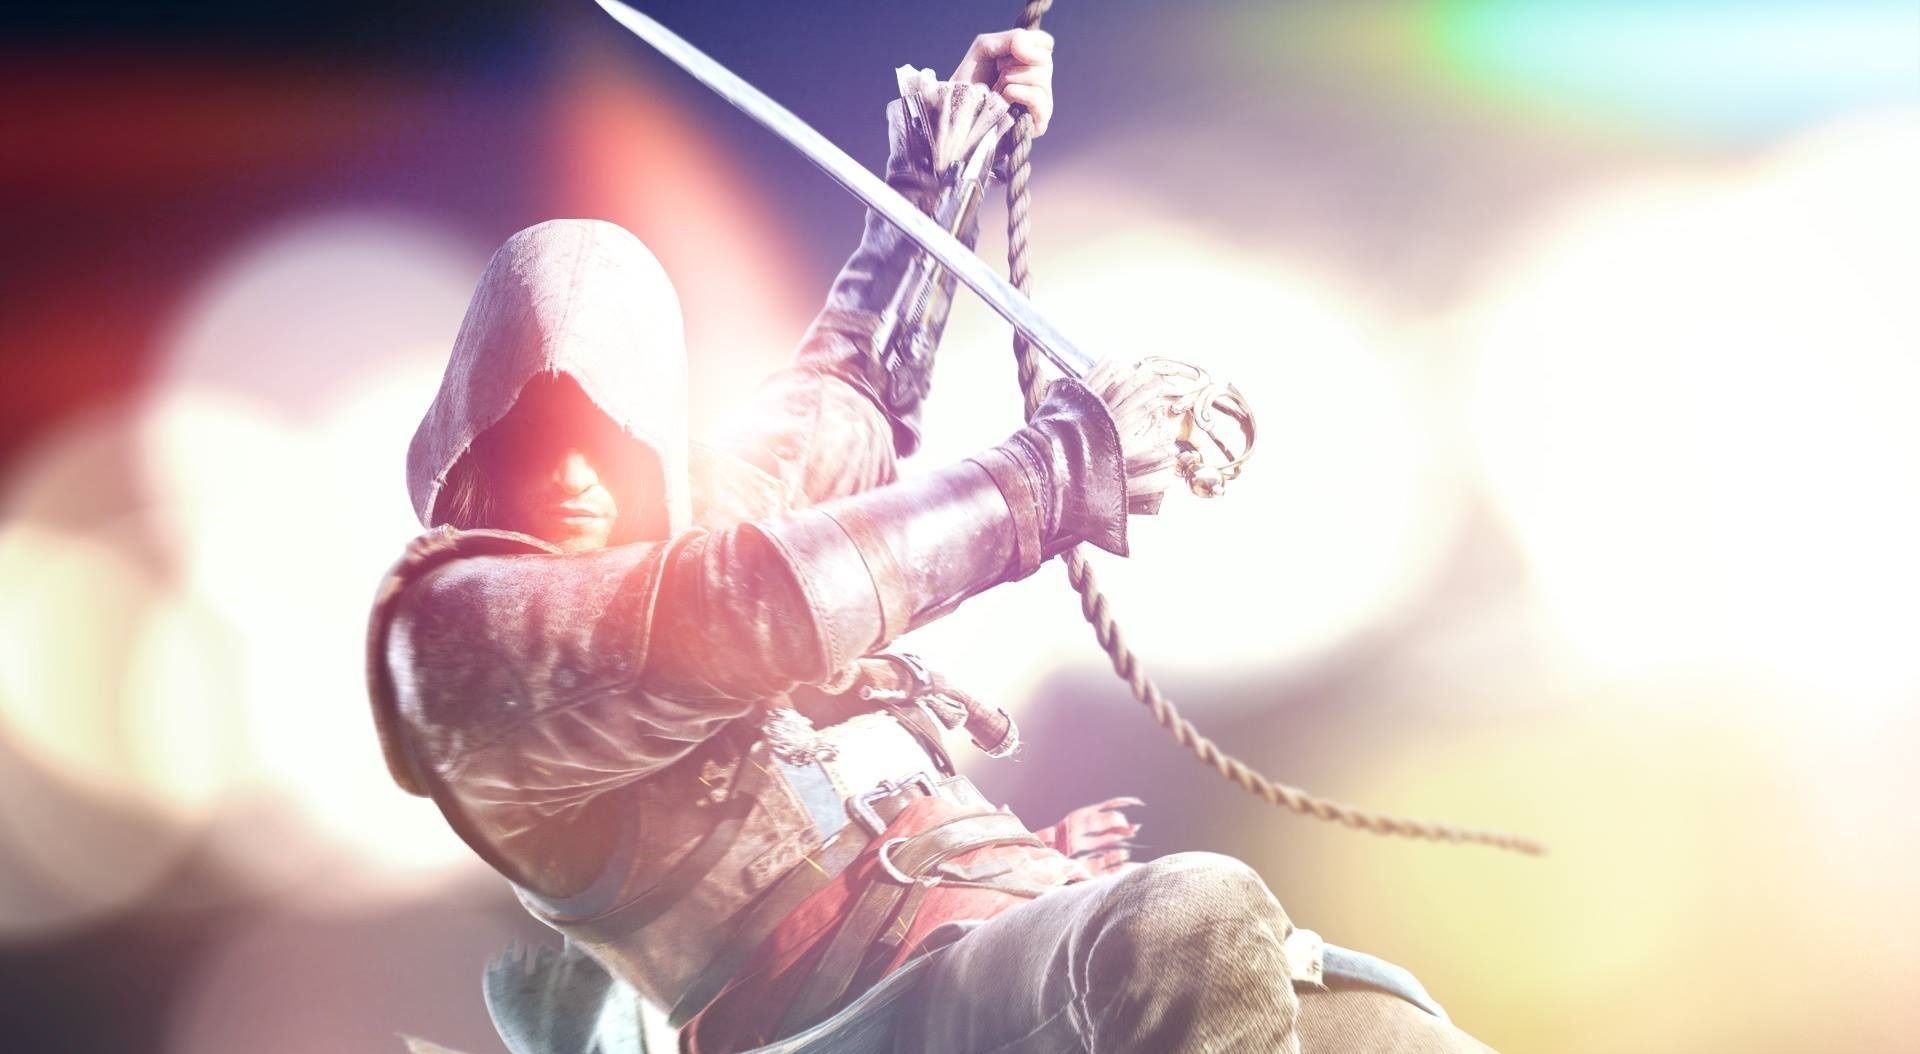 Assassins Creed IV:Blag Flag, Edward Kenway